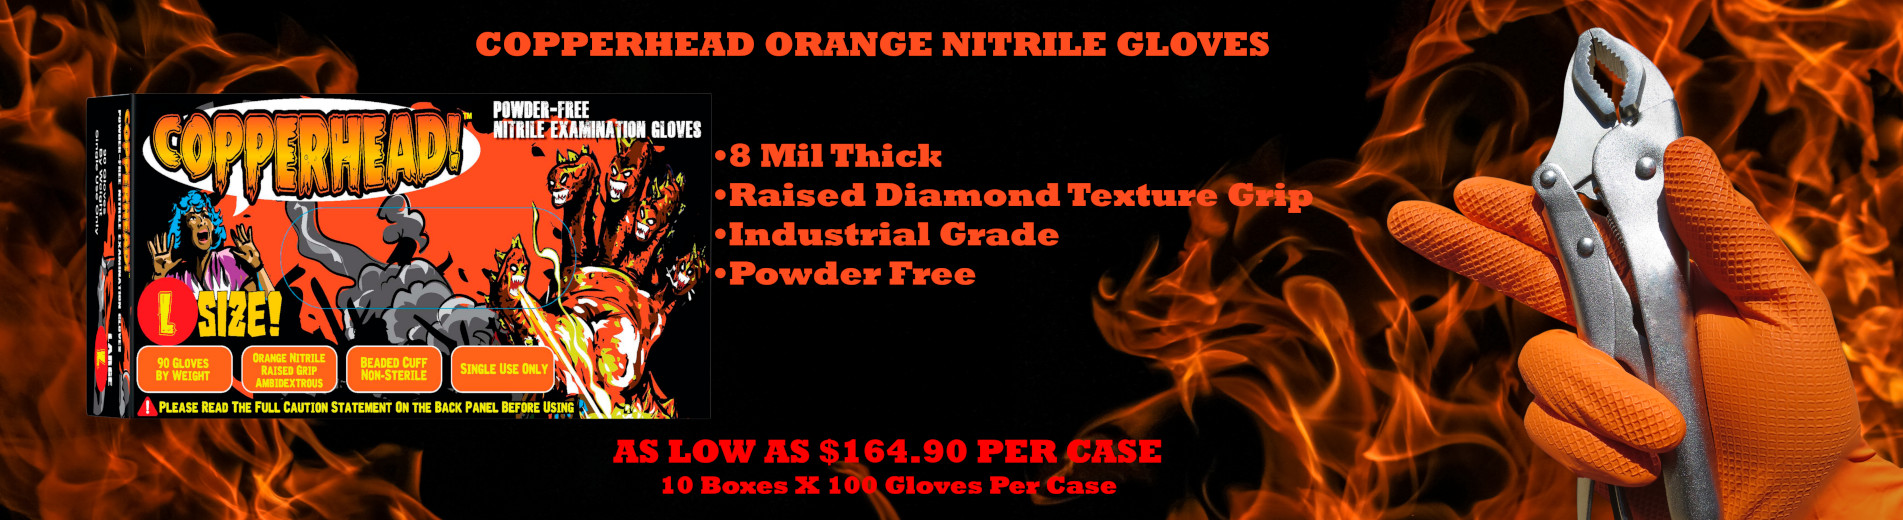 Copperhead 8 Mil Orange Nitrile Disposable Gloves